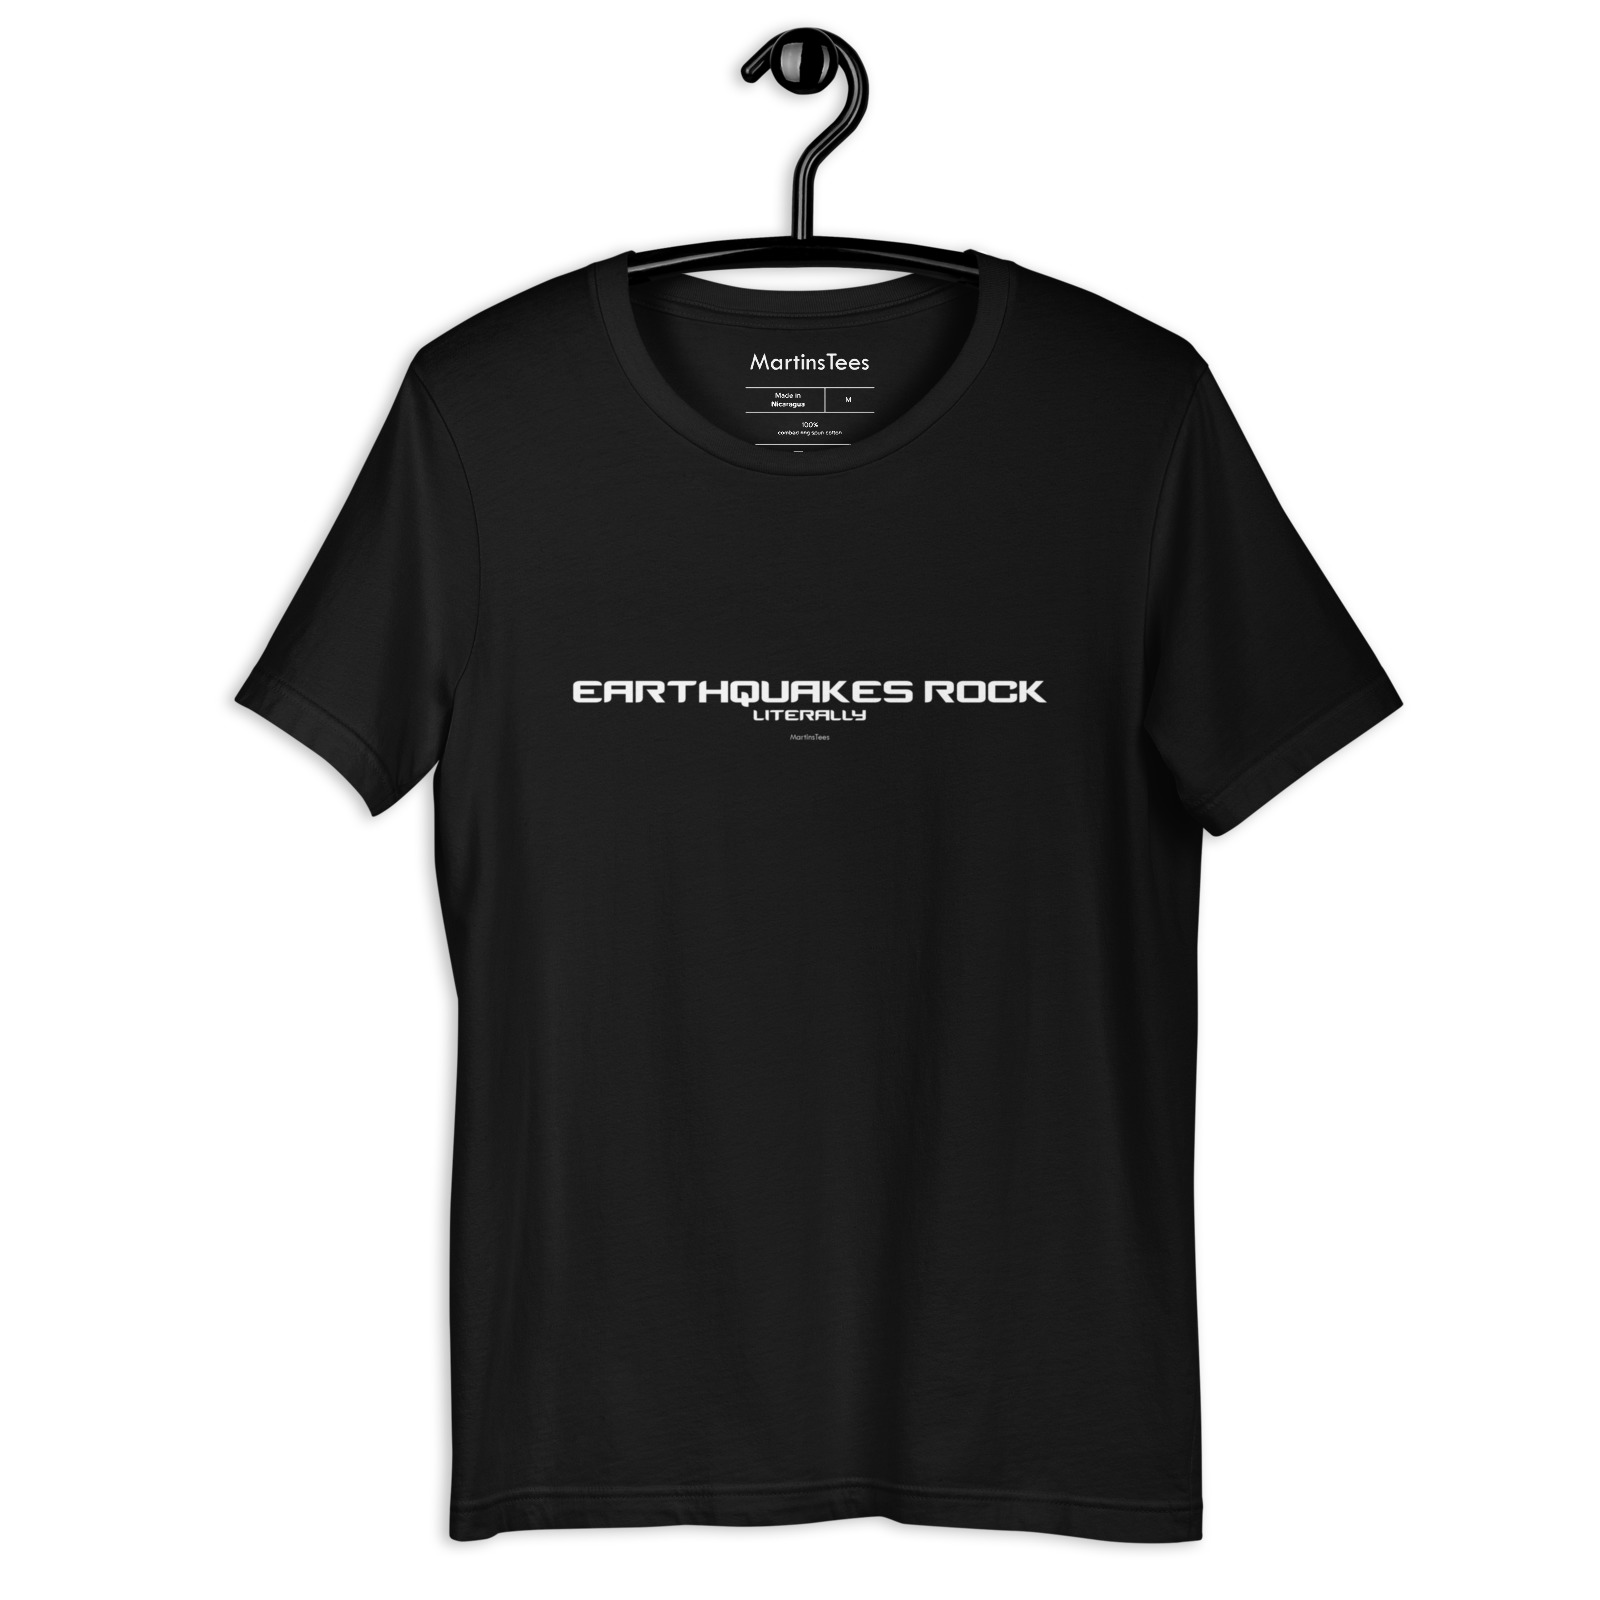 T-shirt: EARTHQUAKES ROCK - LITERALLY